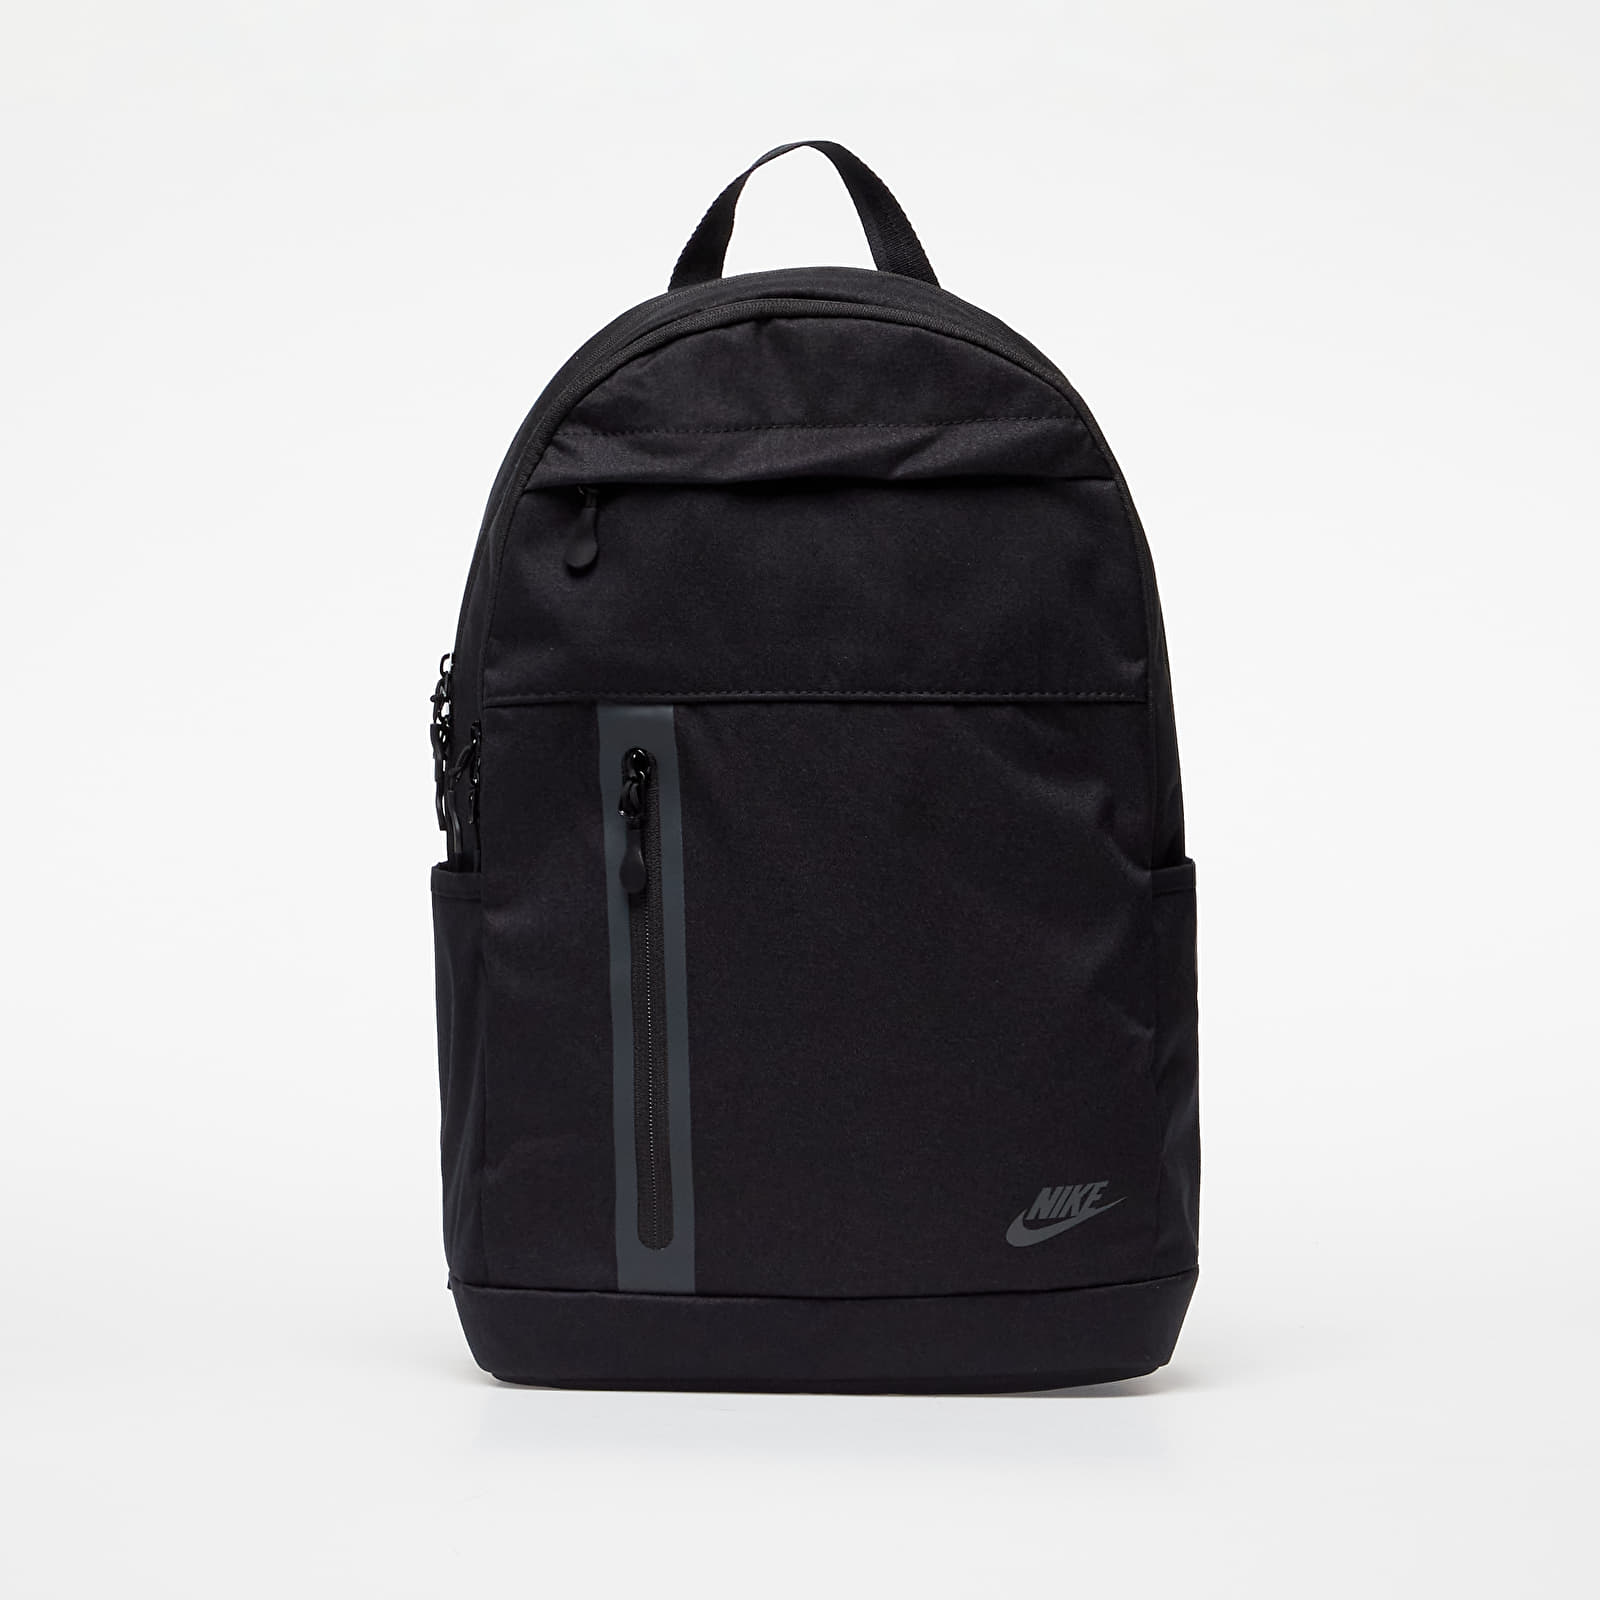 Backpacks Nike Elemental Premium Backpack Black/ Black/ Anthracite